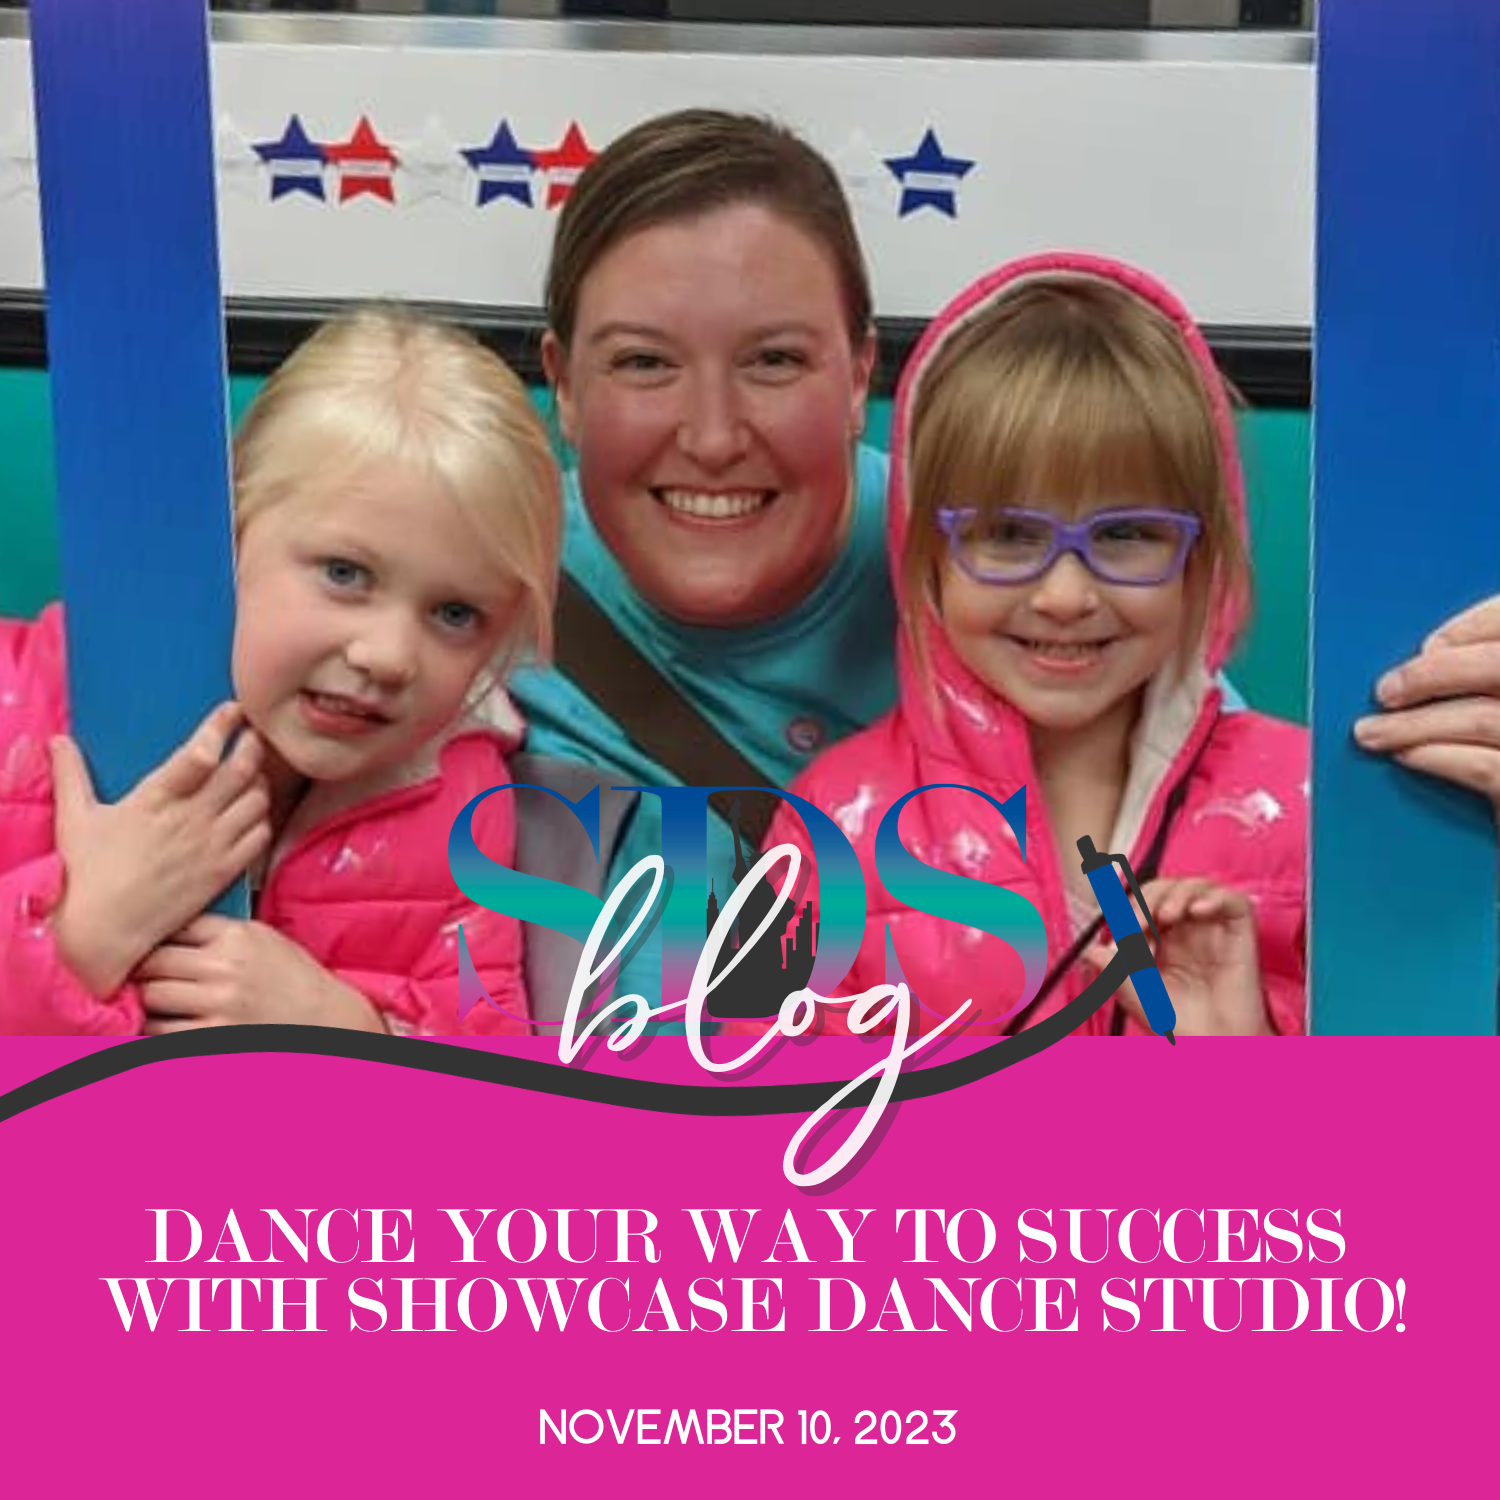 Dance Your Way to Success with Showcase Dance Studio in Manassas, VA!